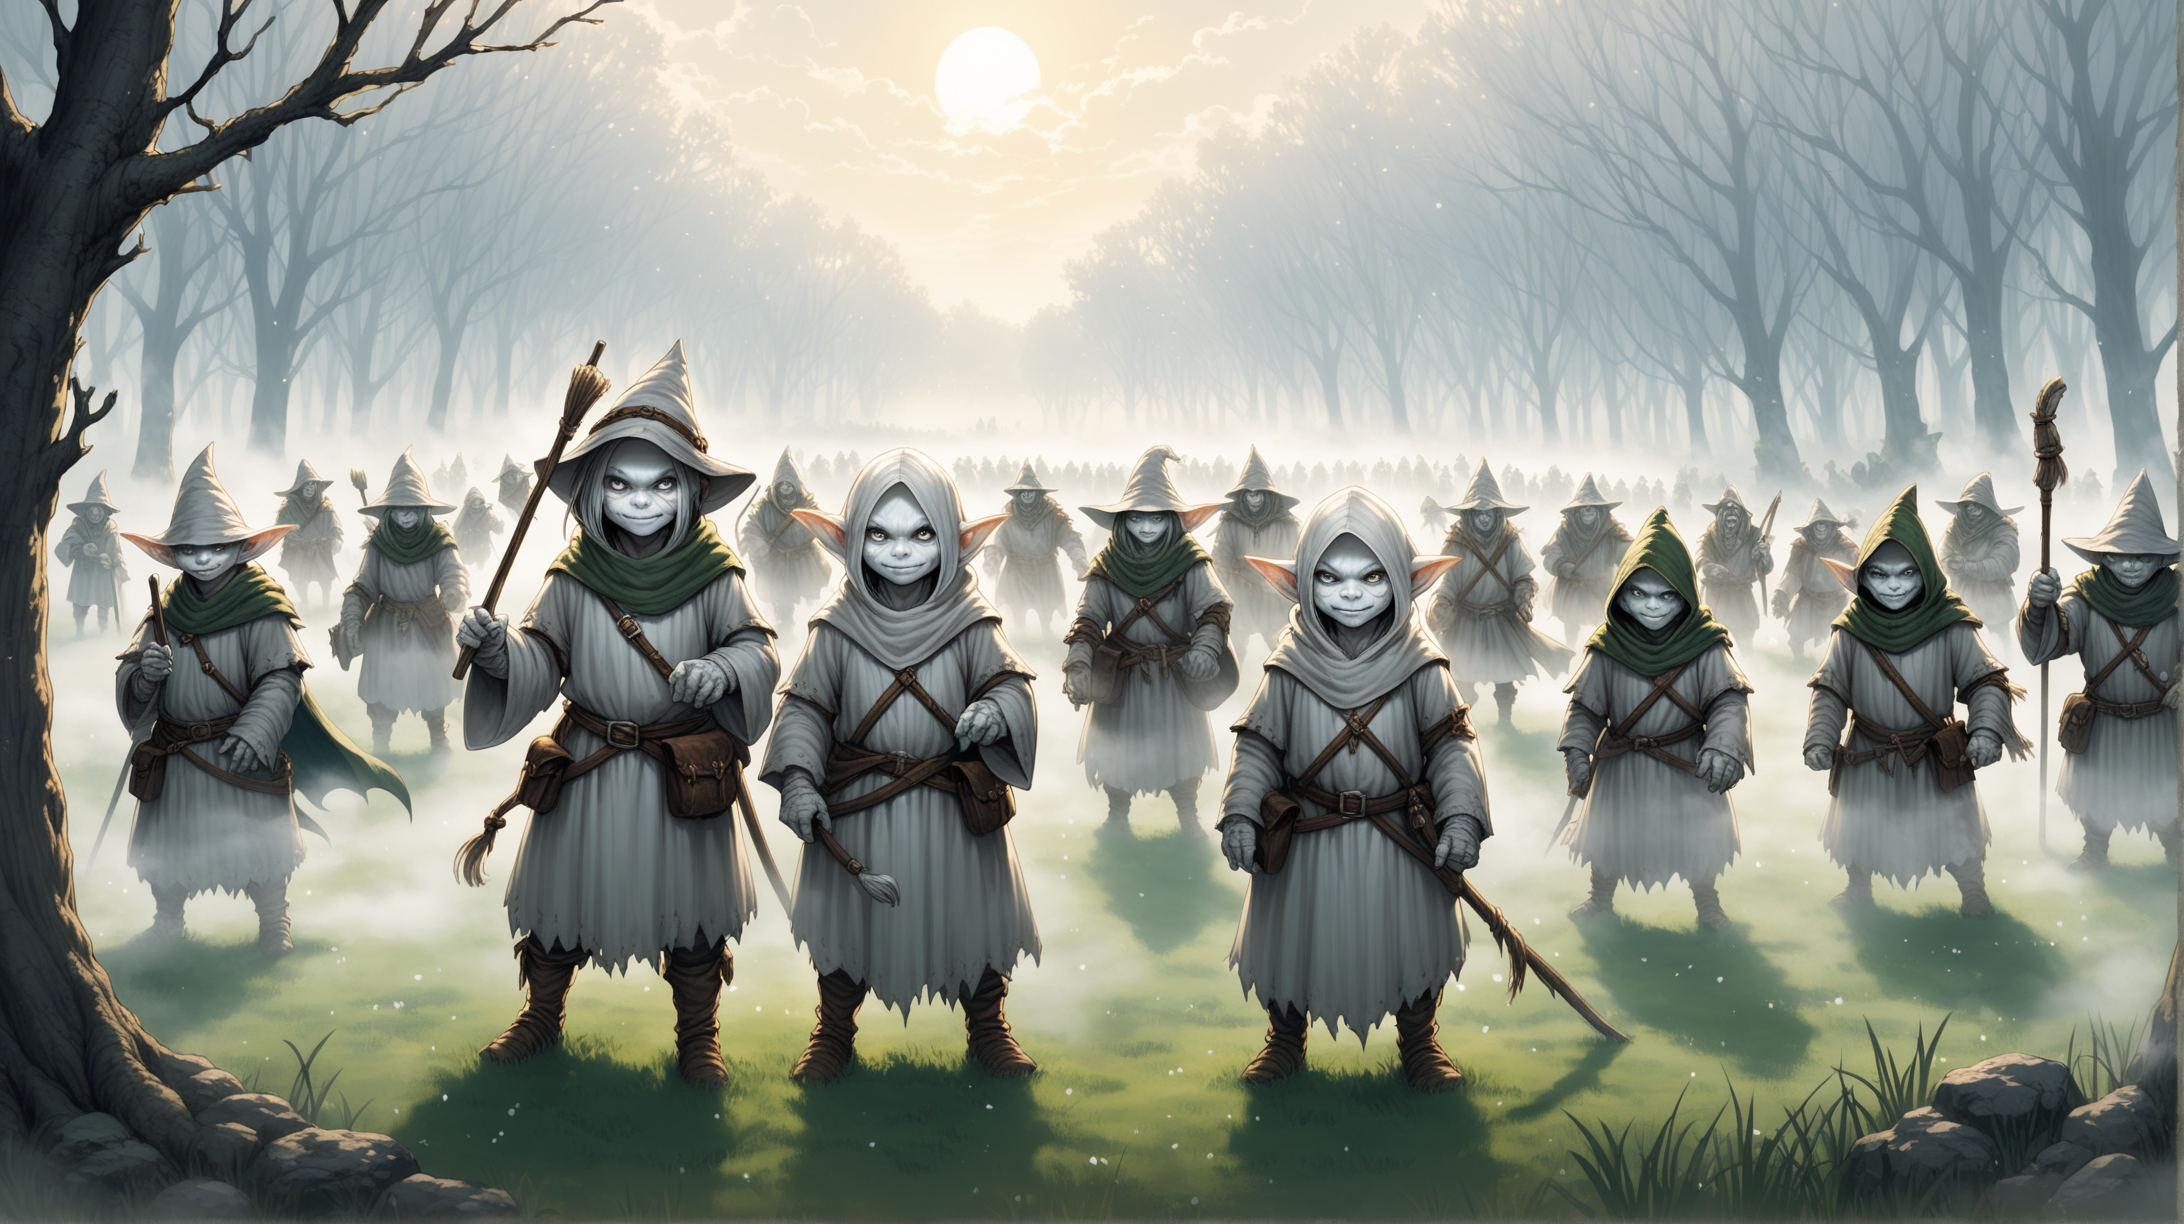 Medieval Fantasy Scene Tribe of Tiny White Goblins in Countryside Fog